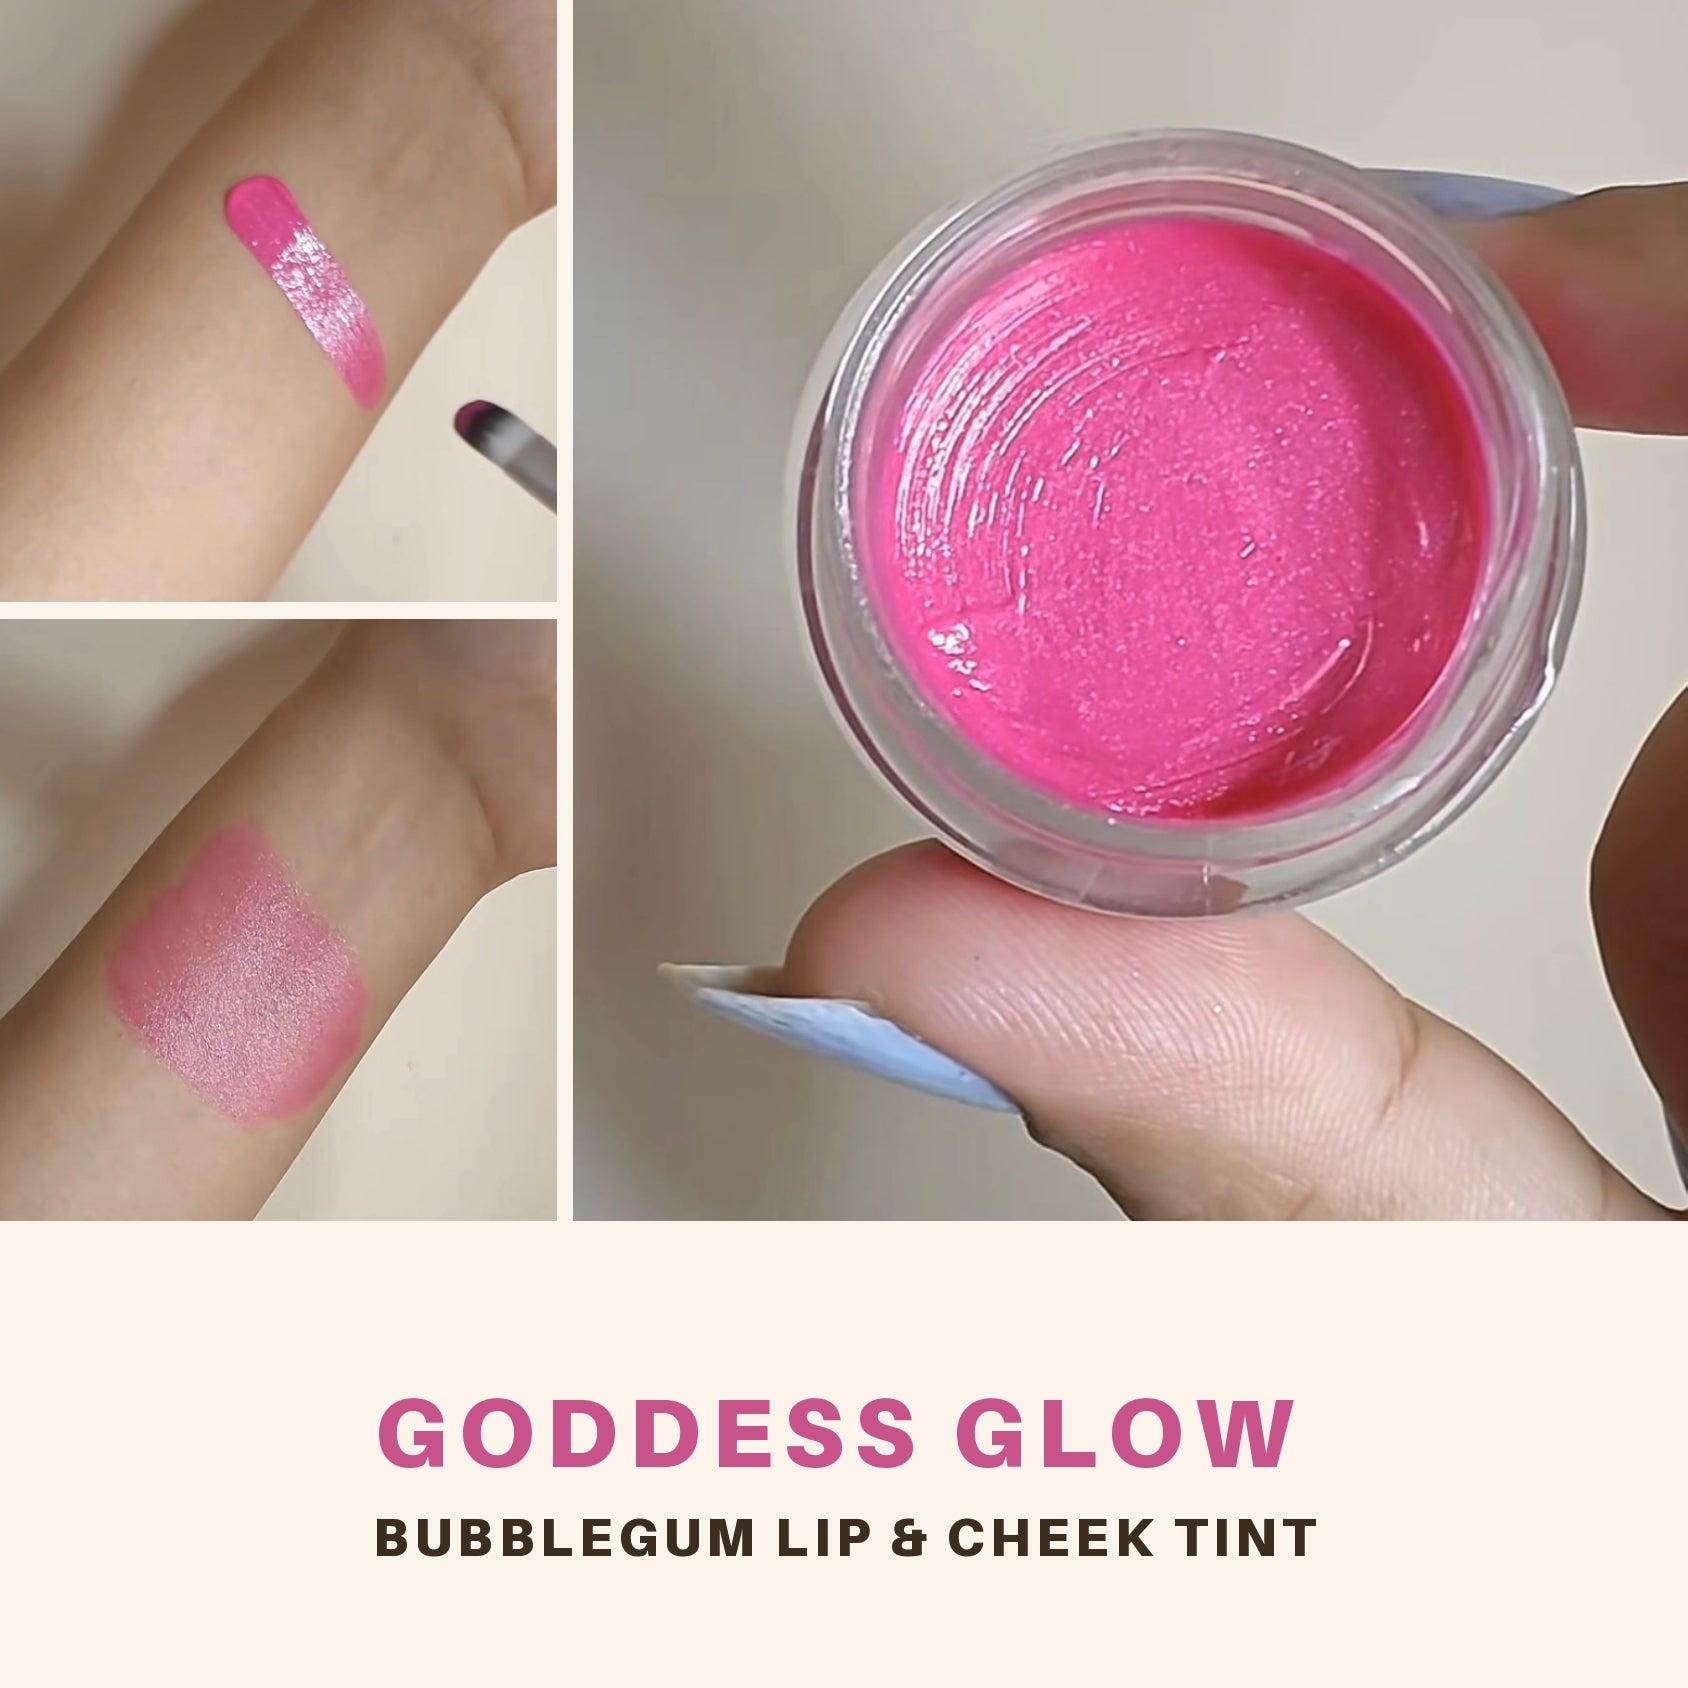 Aegte 4 in 1 Goddess Glow Bubblegum Lip & Cheek Tint Luminous Highlighter & Blusher with SPF 35++ Lightens Dark Lips Lab Certified